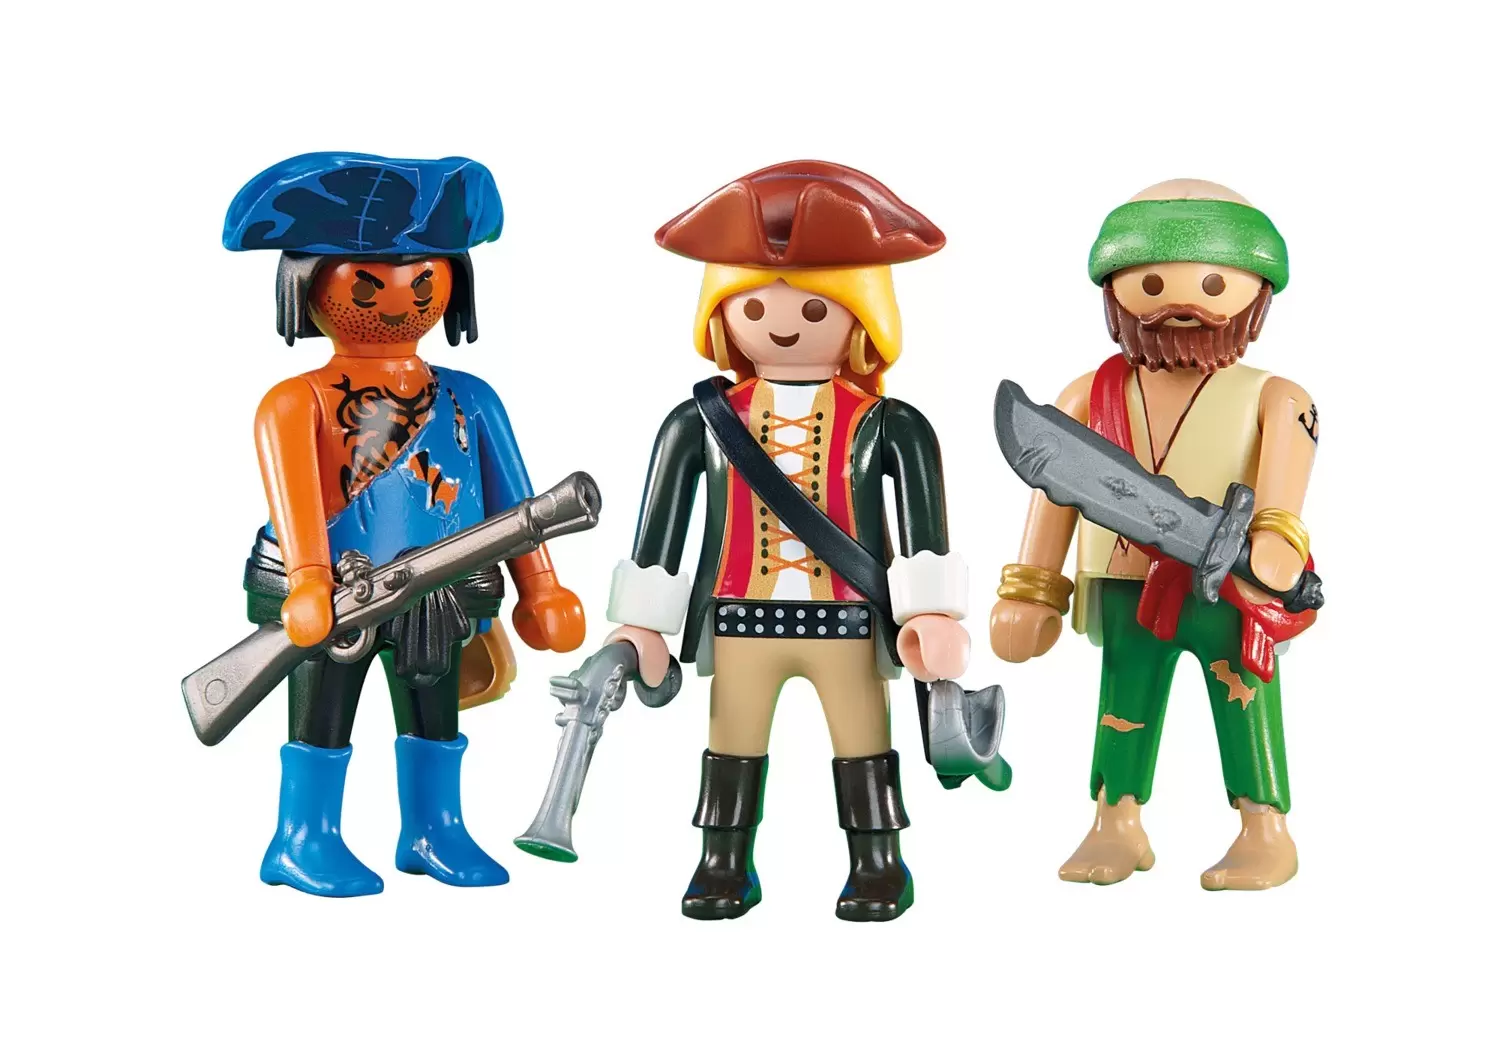 Pirate Playmobil - 2 pirates with a piratin